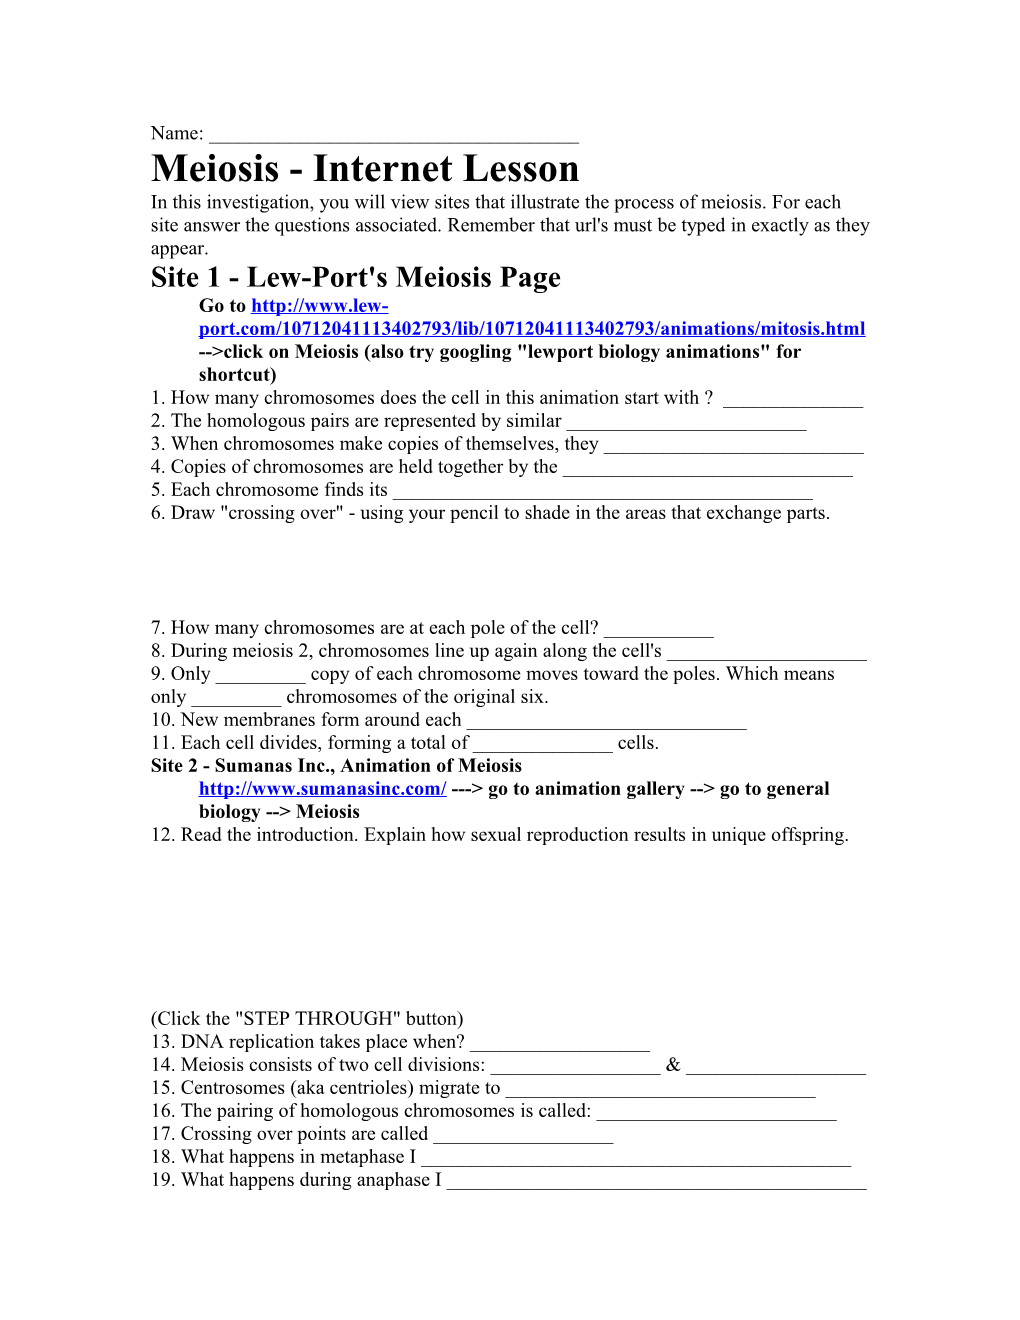 Meiosis - Internet Lesson